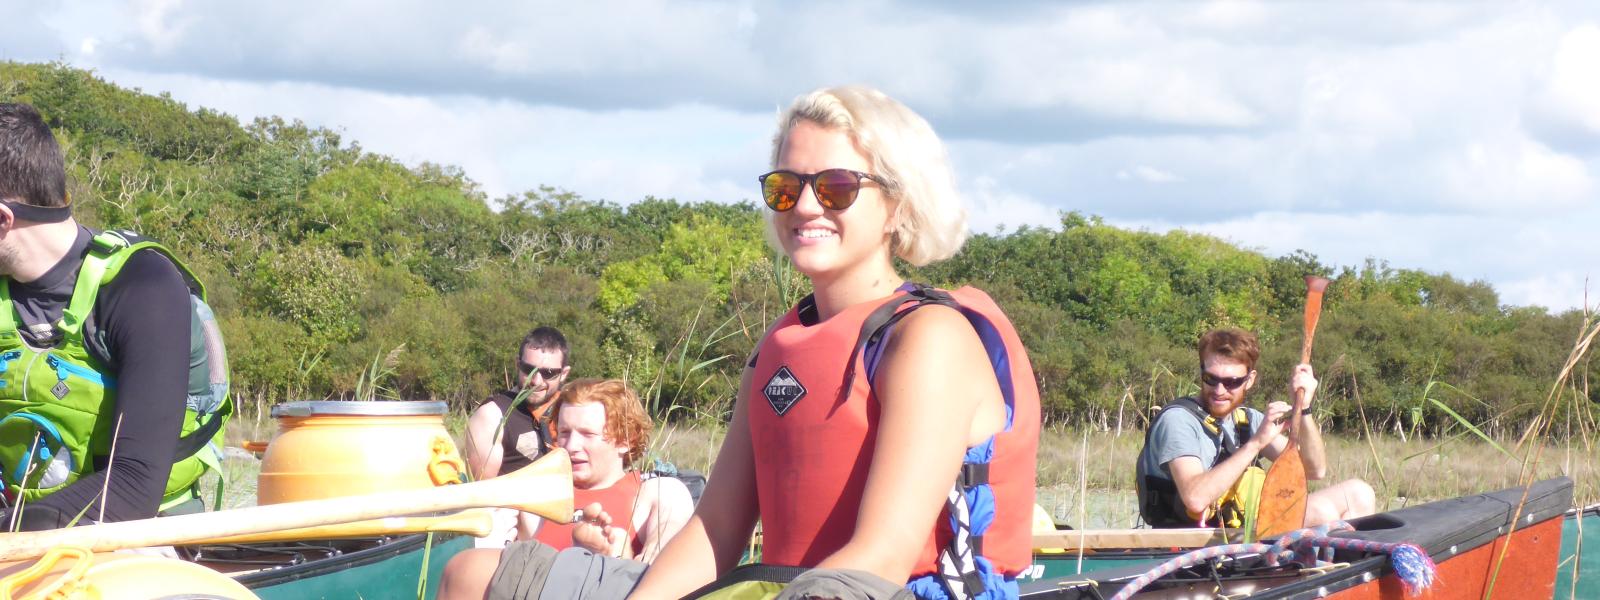 GMIT outdoor ed students on kayaking trip